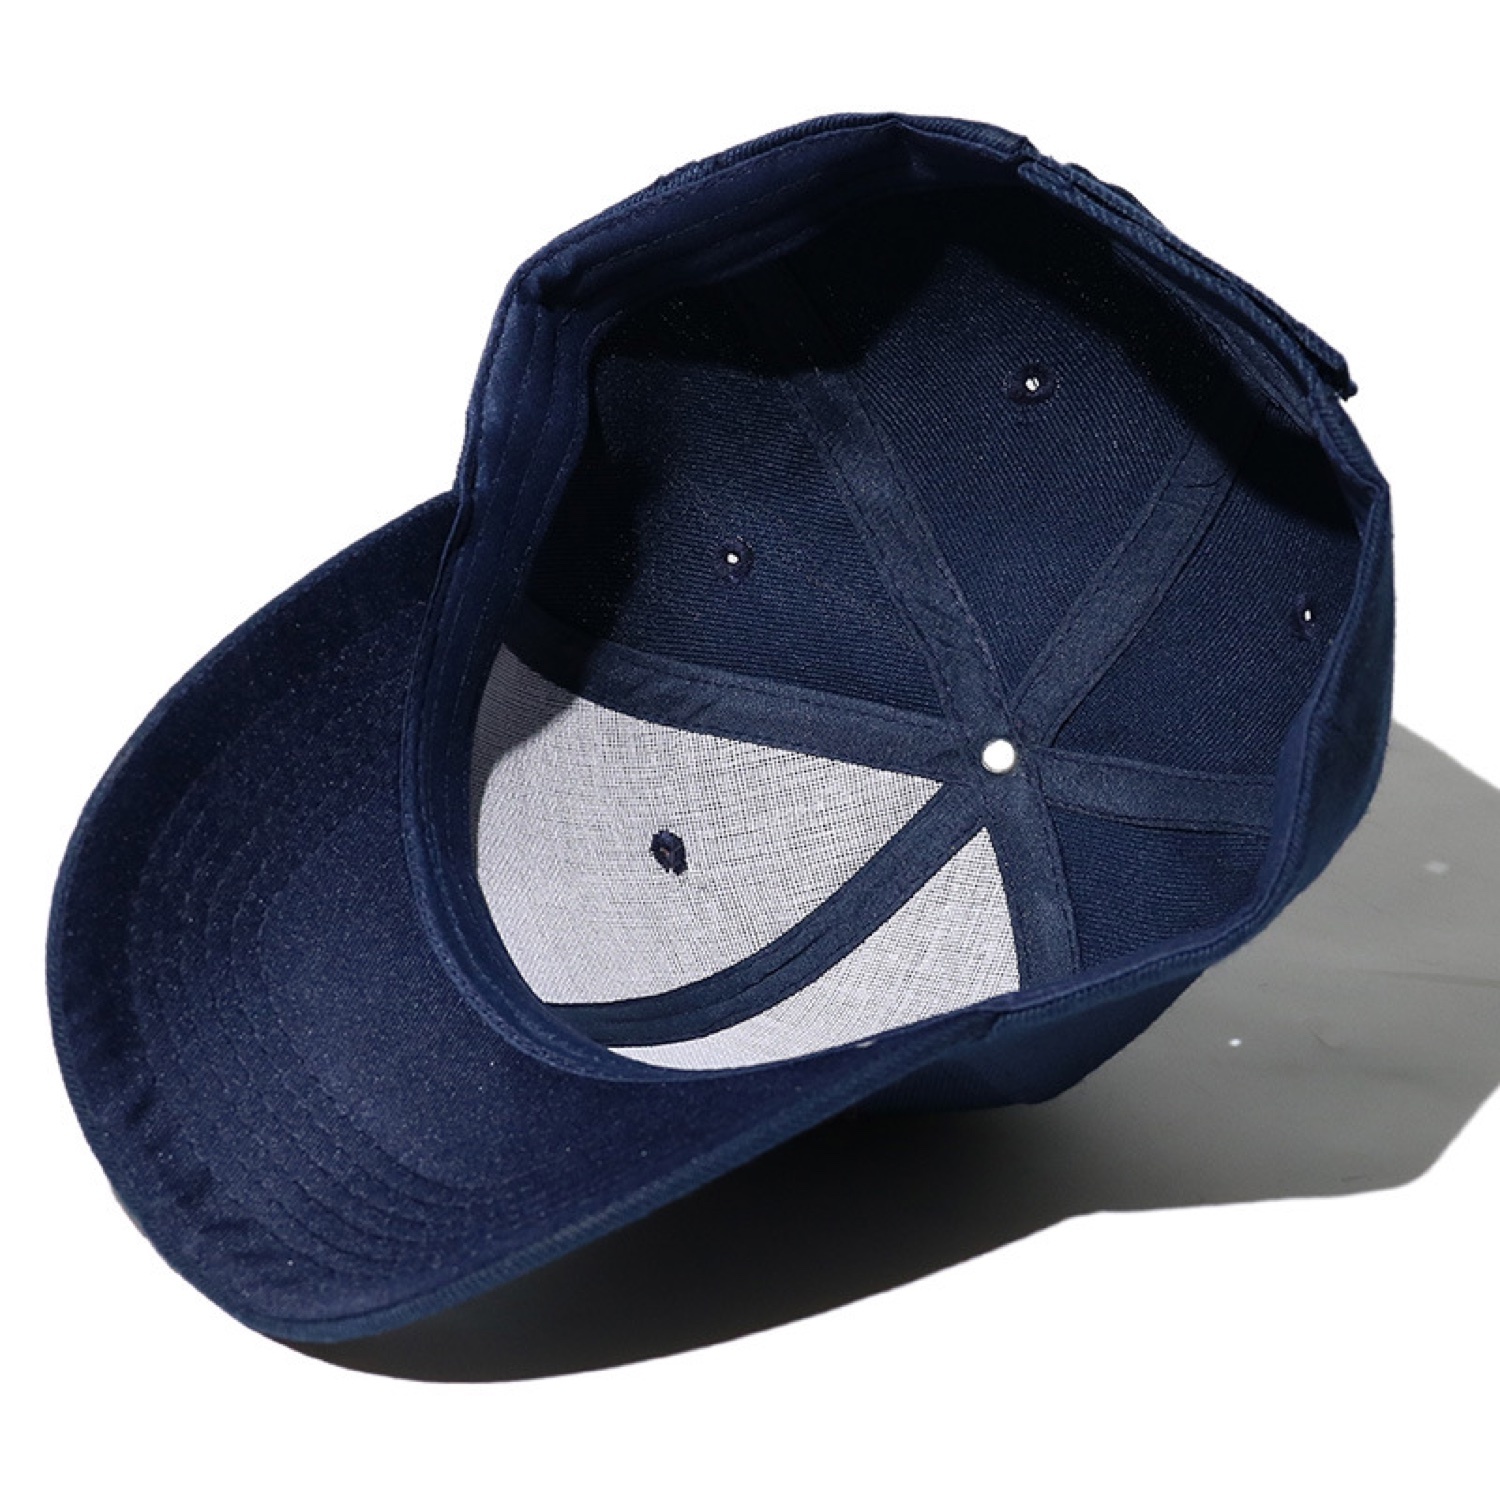 Baseball Cap Herren -  Basecap, Trucker Cap - Kopfumfang 55-60 CM - Kappe in Verstellbarer Größe - Beige-4